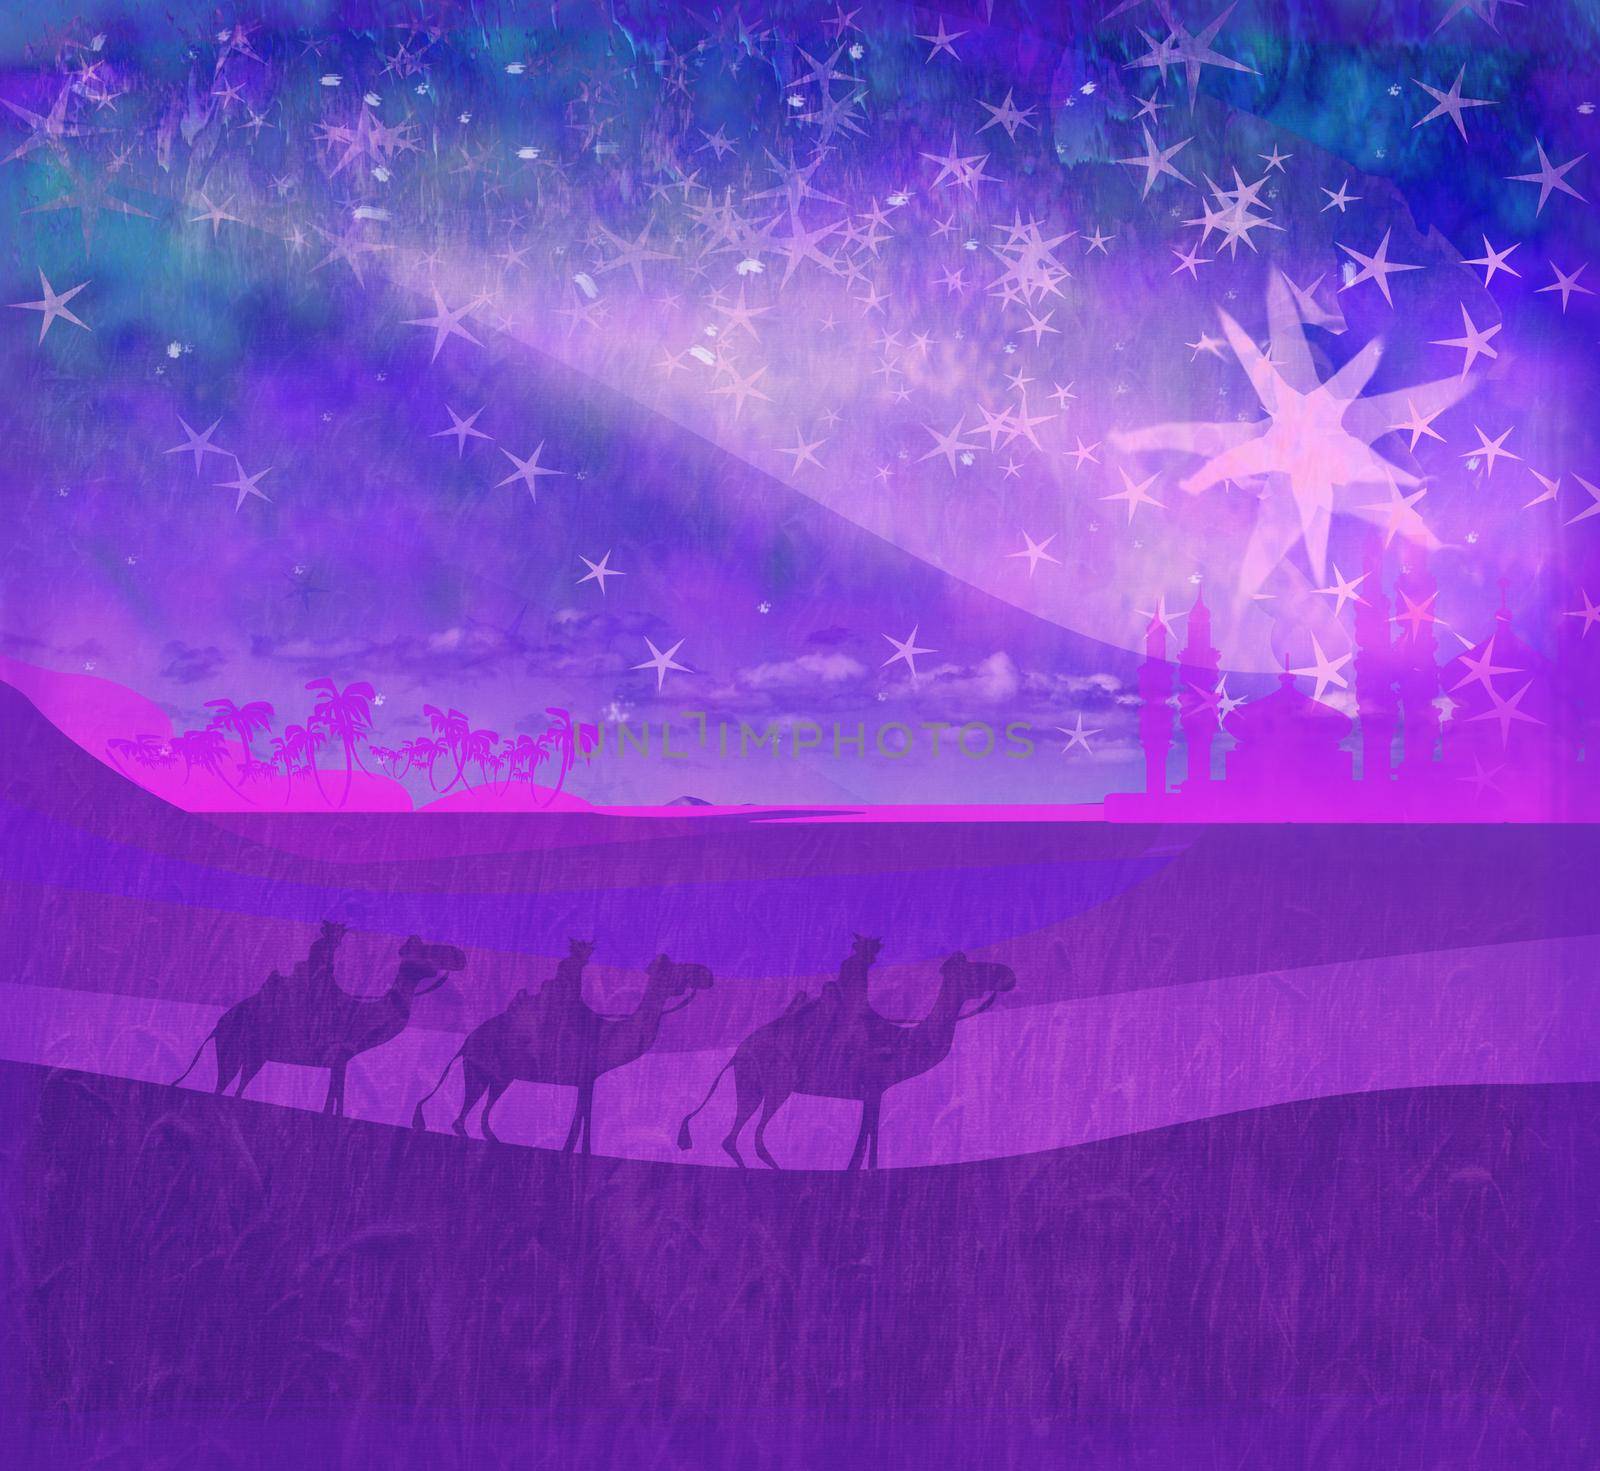 Classic three magic scene and shining star of Bethlehem by JackyBrown